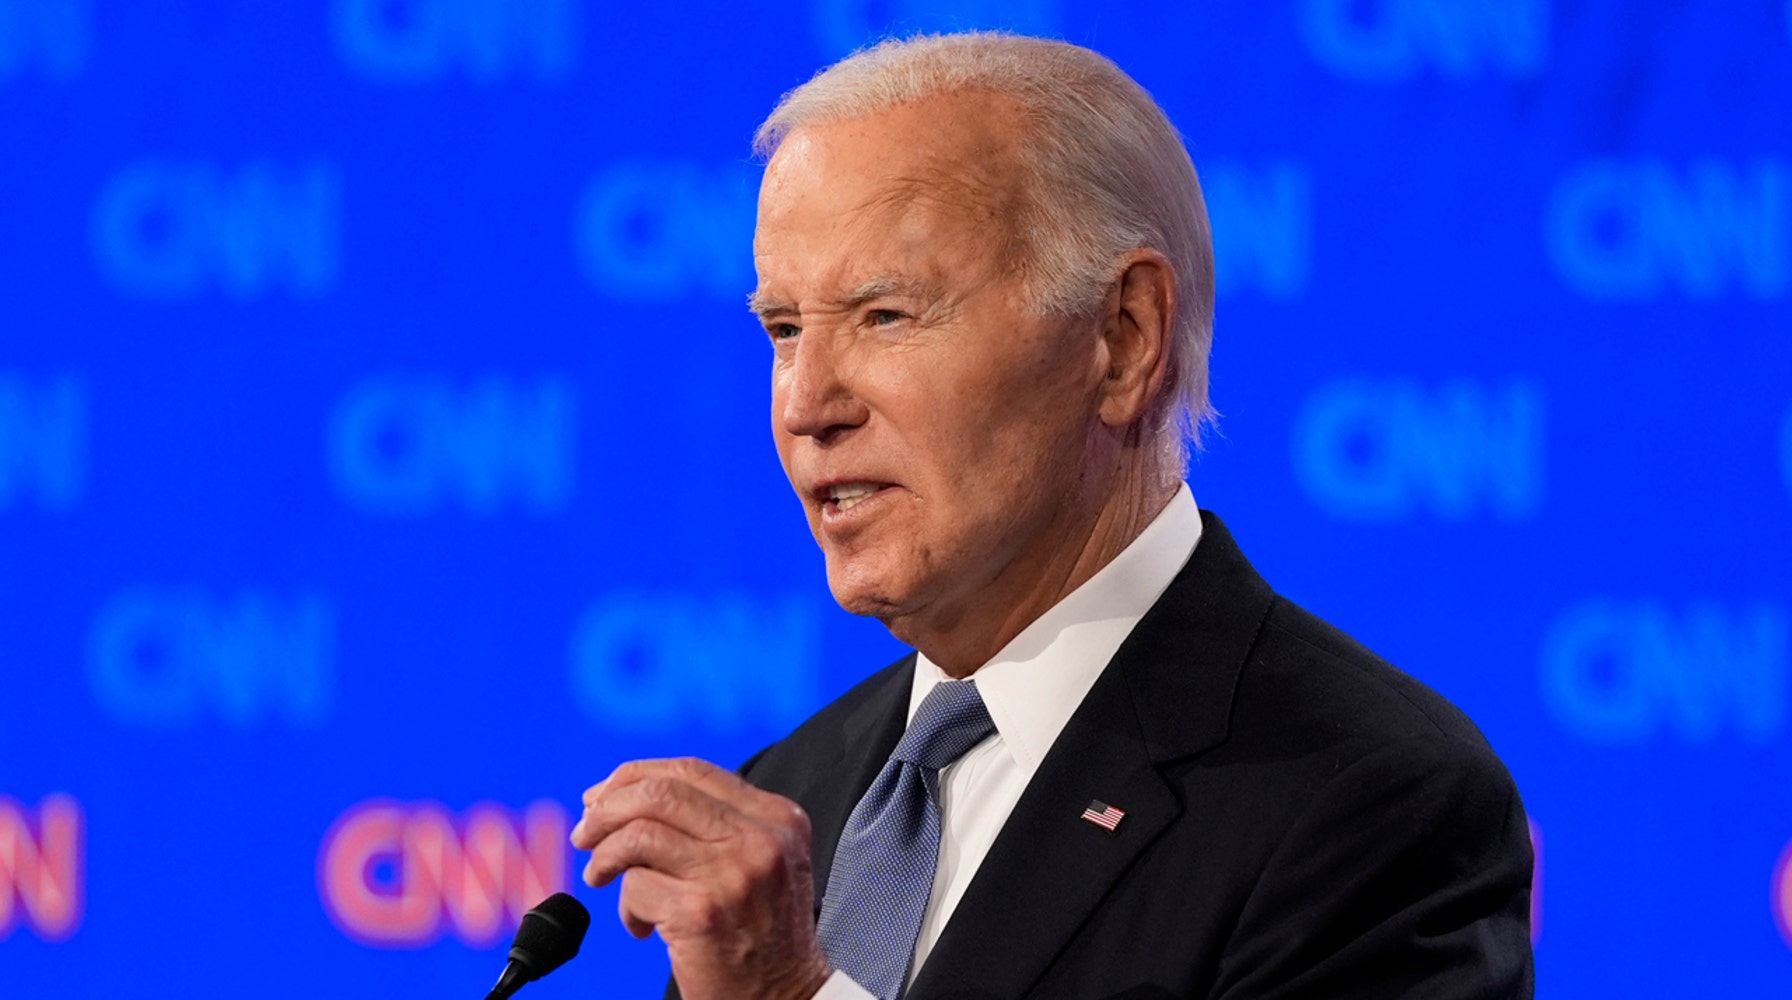 Democrats Abandon Biden After 'Disastrous' Debate Performance